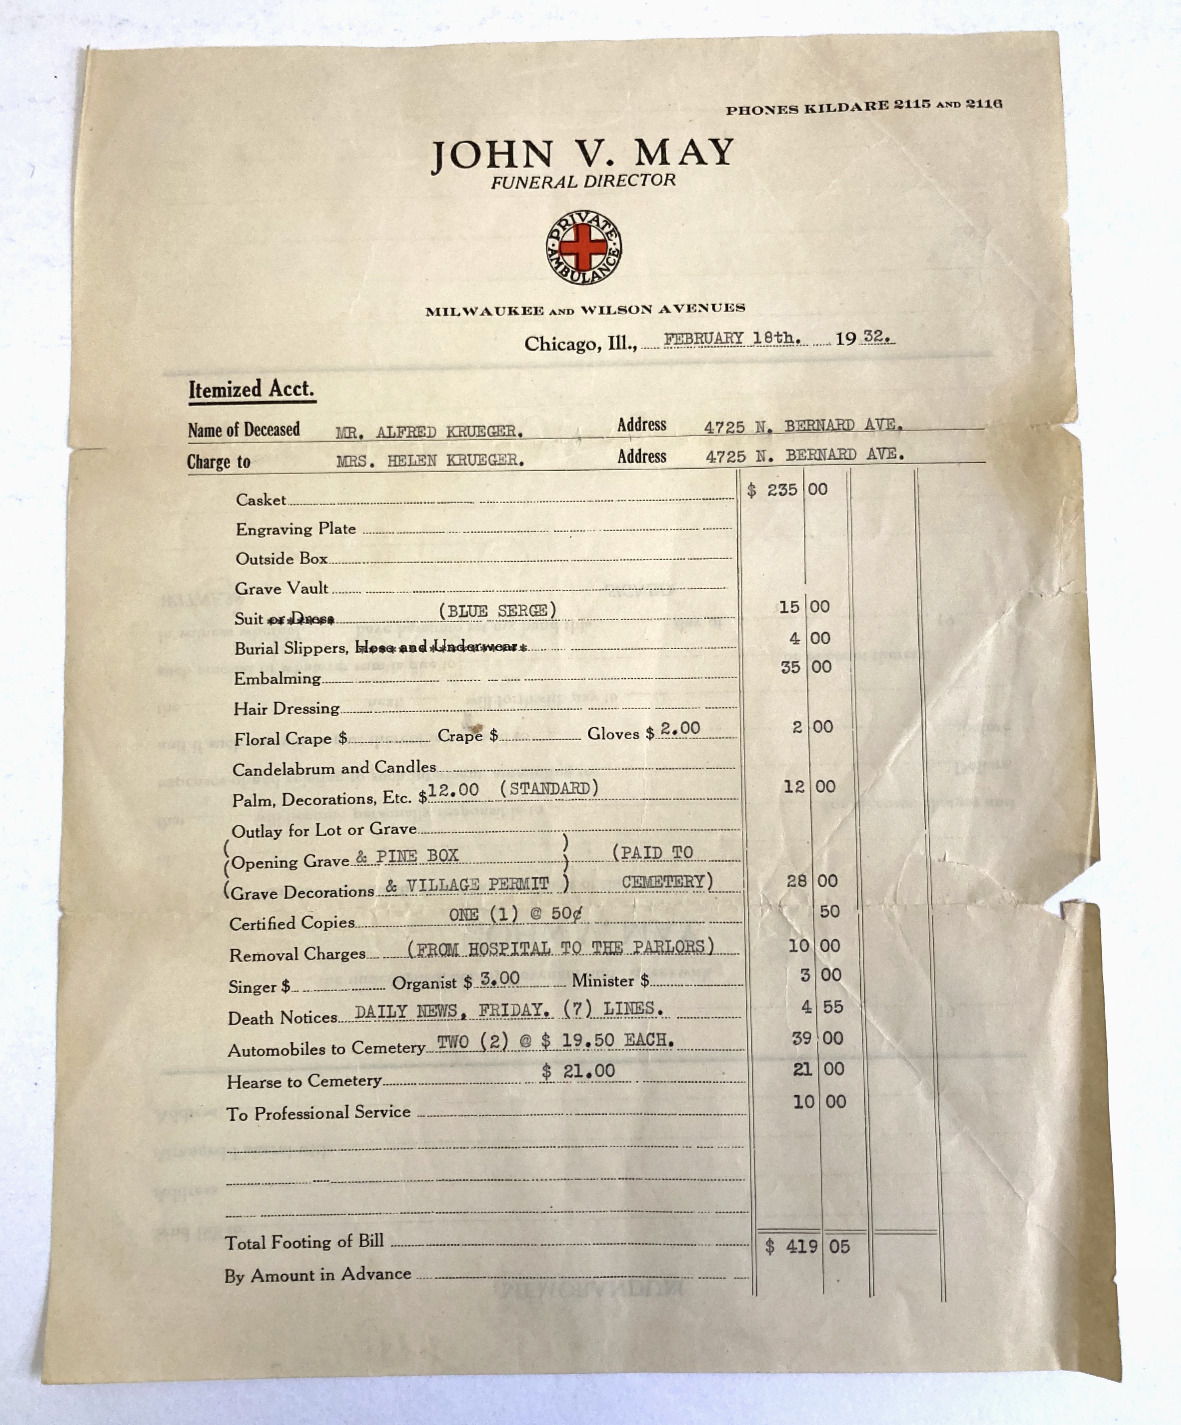 1932 Funeral Home Invoice Chicago Illinois Milwaukee Avenue John V May 30s